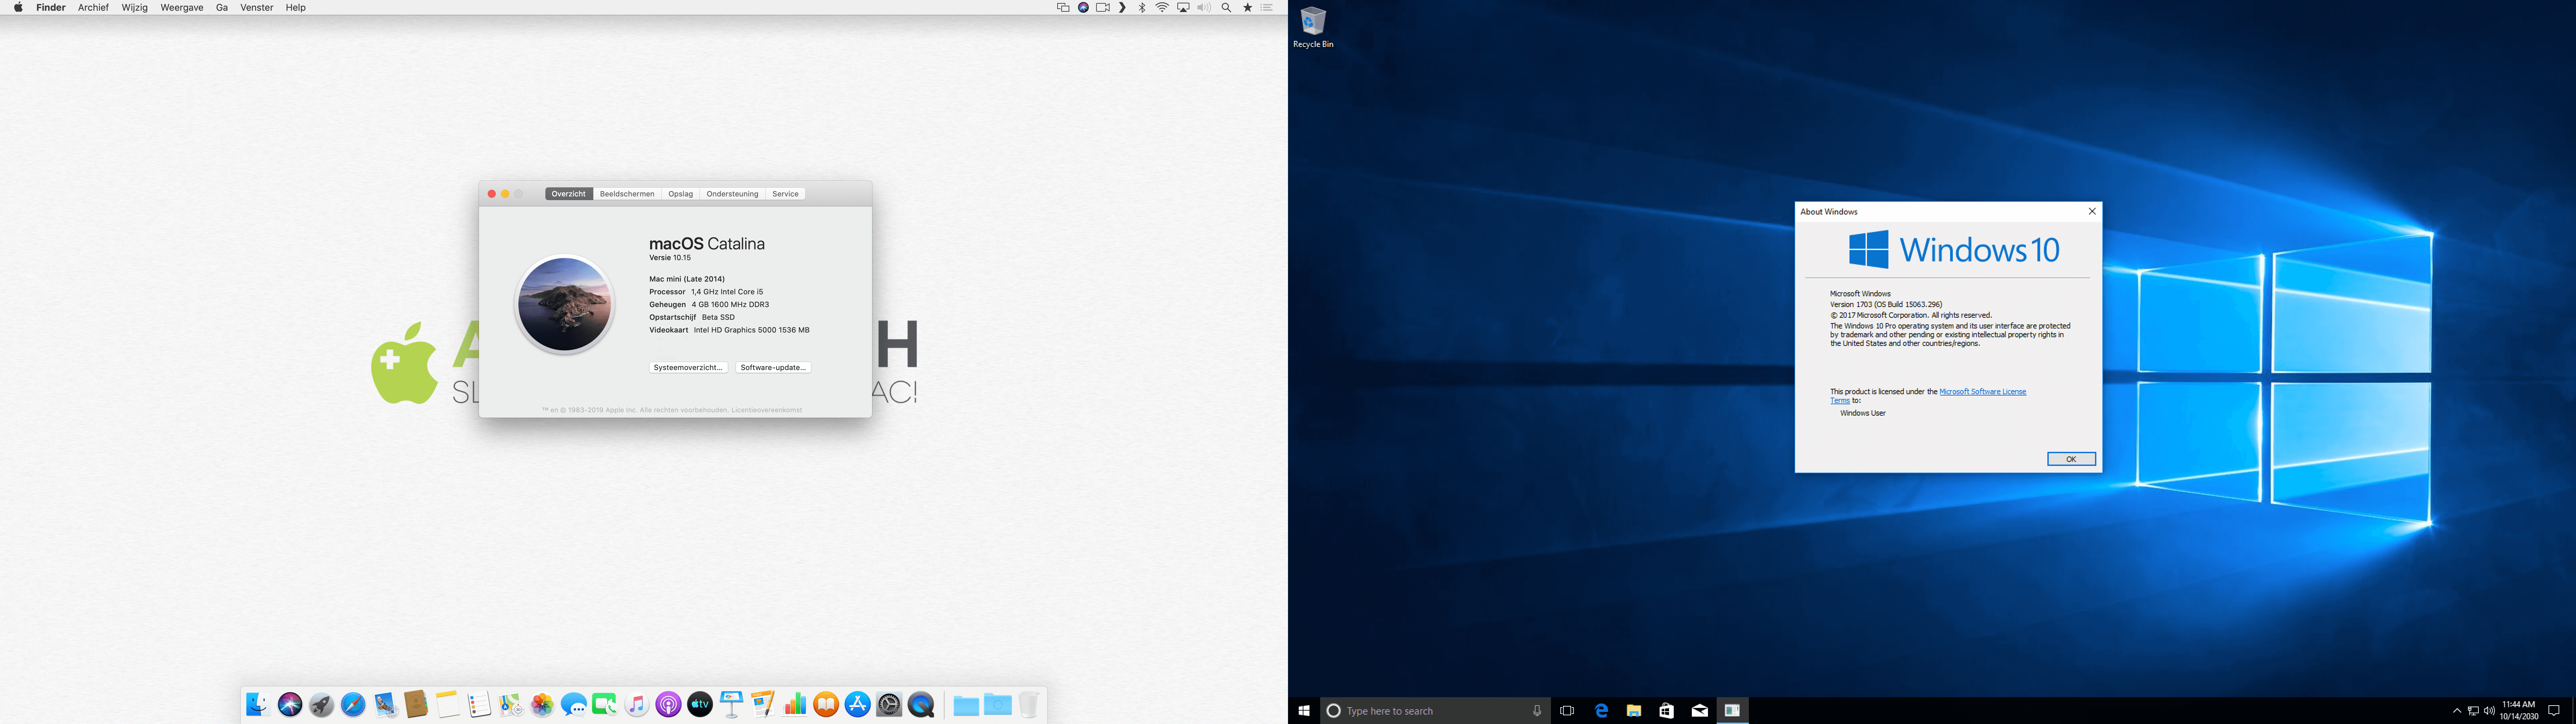 Links: macOS Catalina, rechts: Windows 10